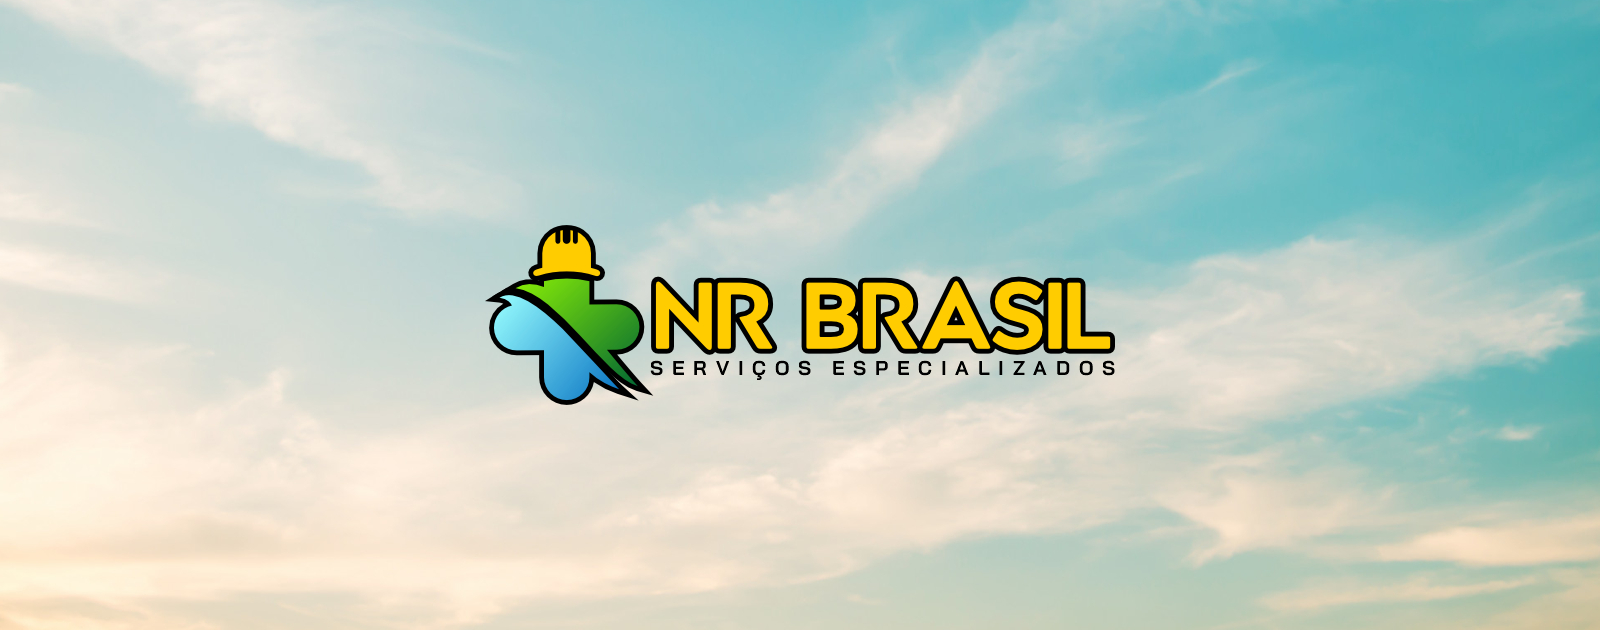 (c) Nrbrasil.com.br